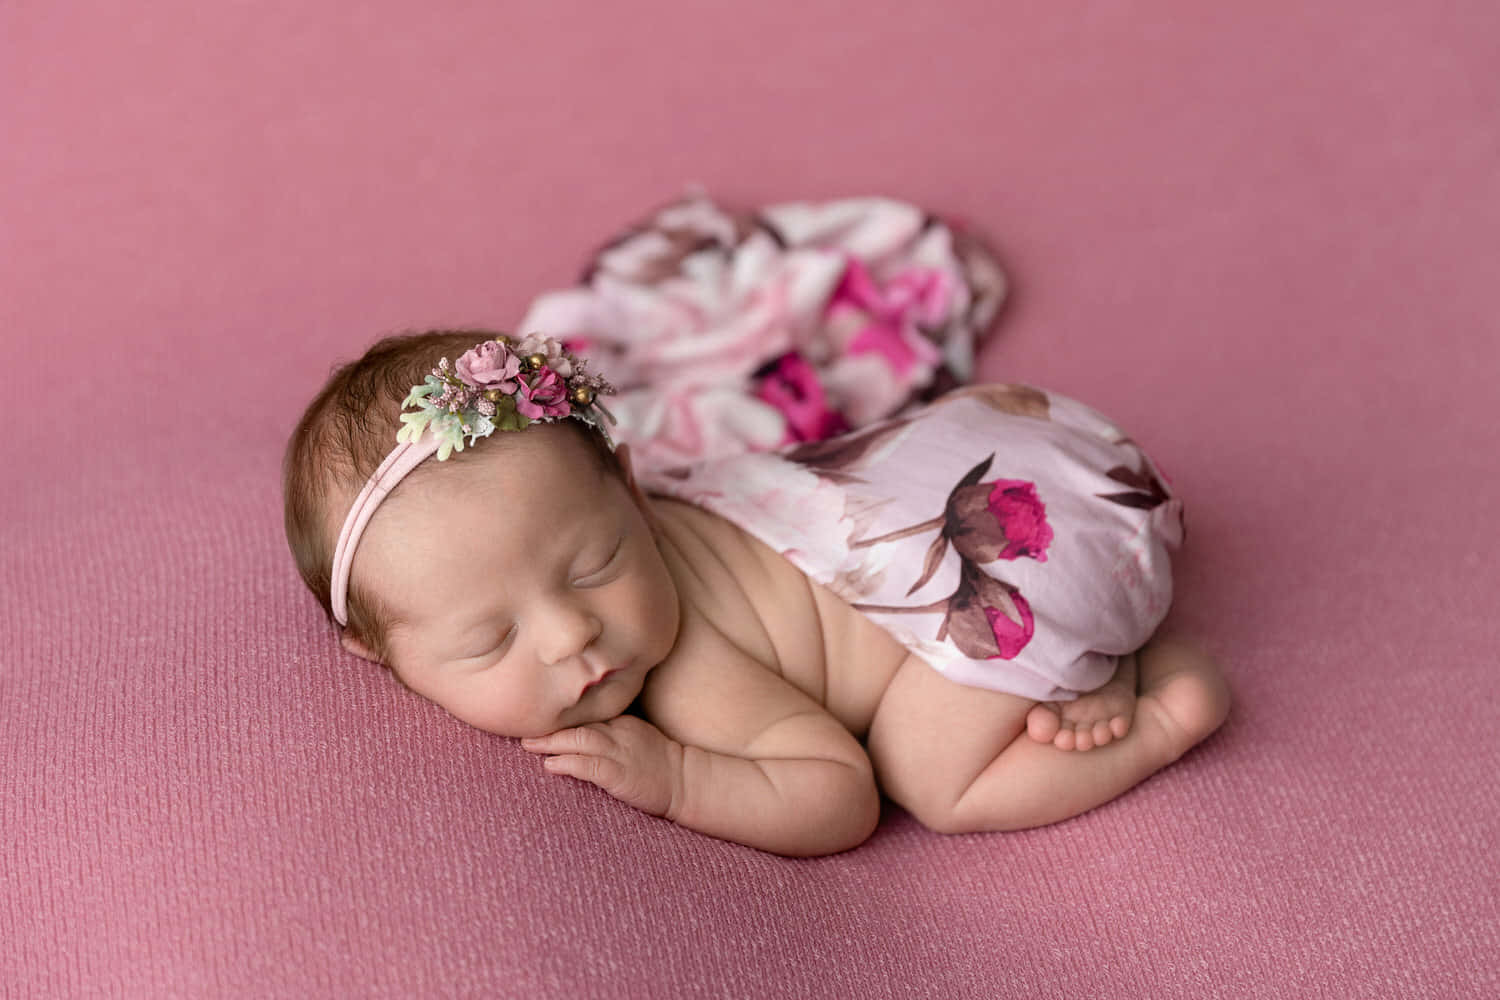 Neugeborenesbaby 1500 X 1000 Bild